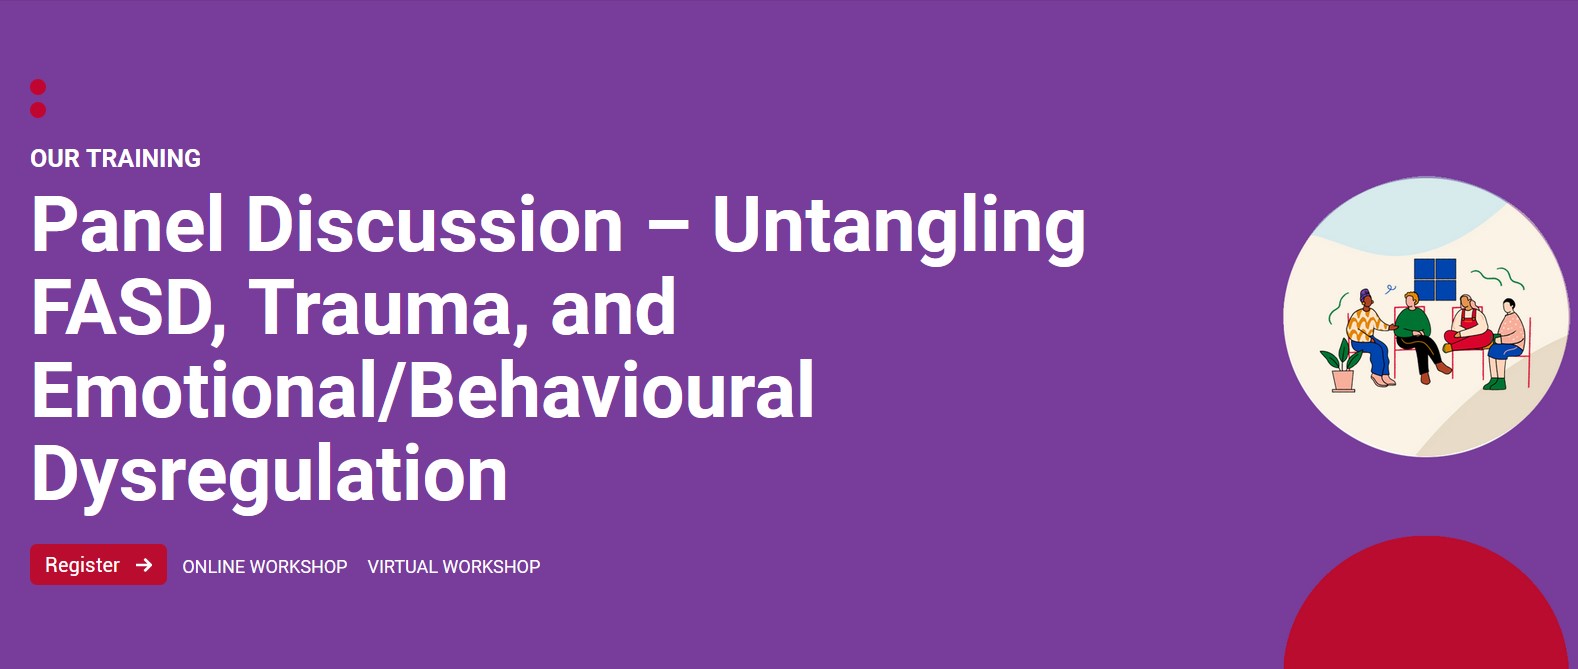 Untangling FASD, Trauma, and Emotional Behavioural Dysregulation